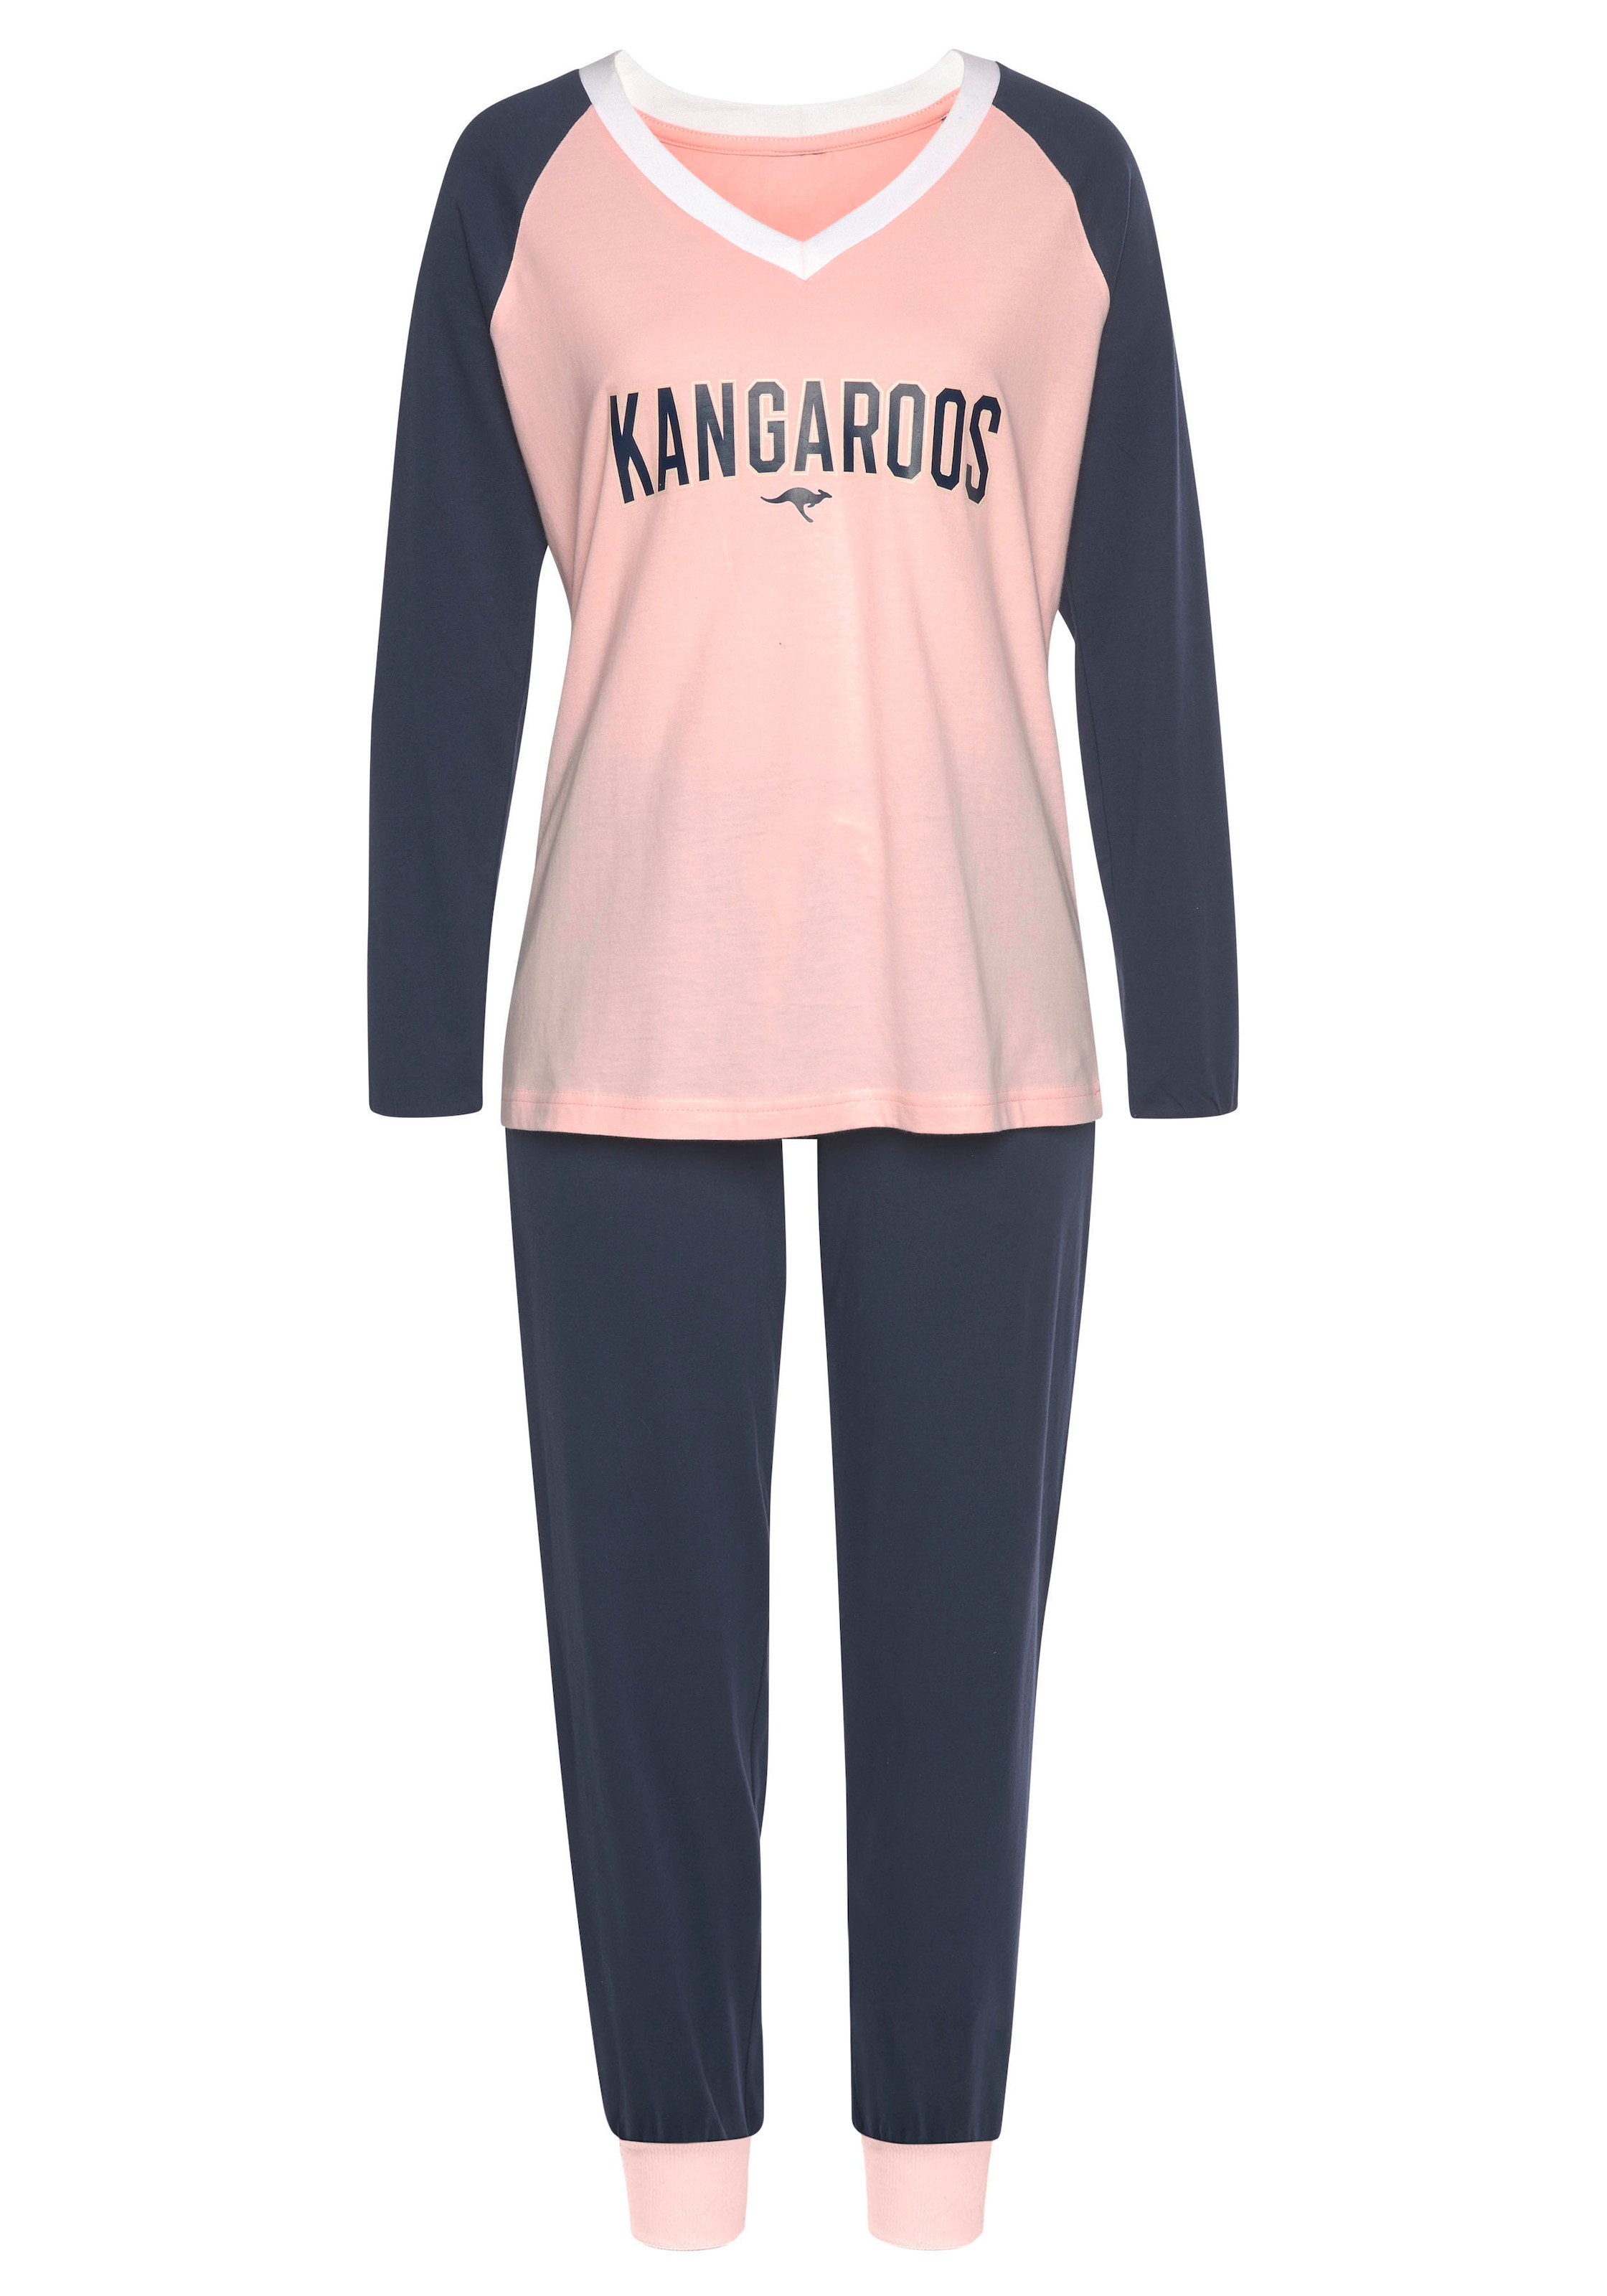 Raglanärmeln KangaROOS mit tlg., Shop (2 Online im OTTO kontrastfarbenen Stück), 1 Pyjama,